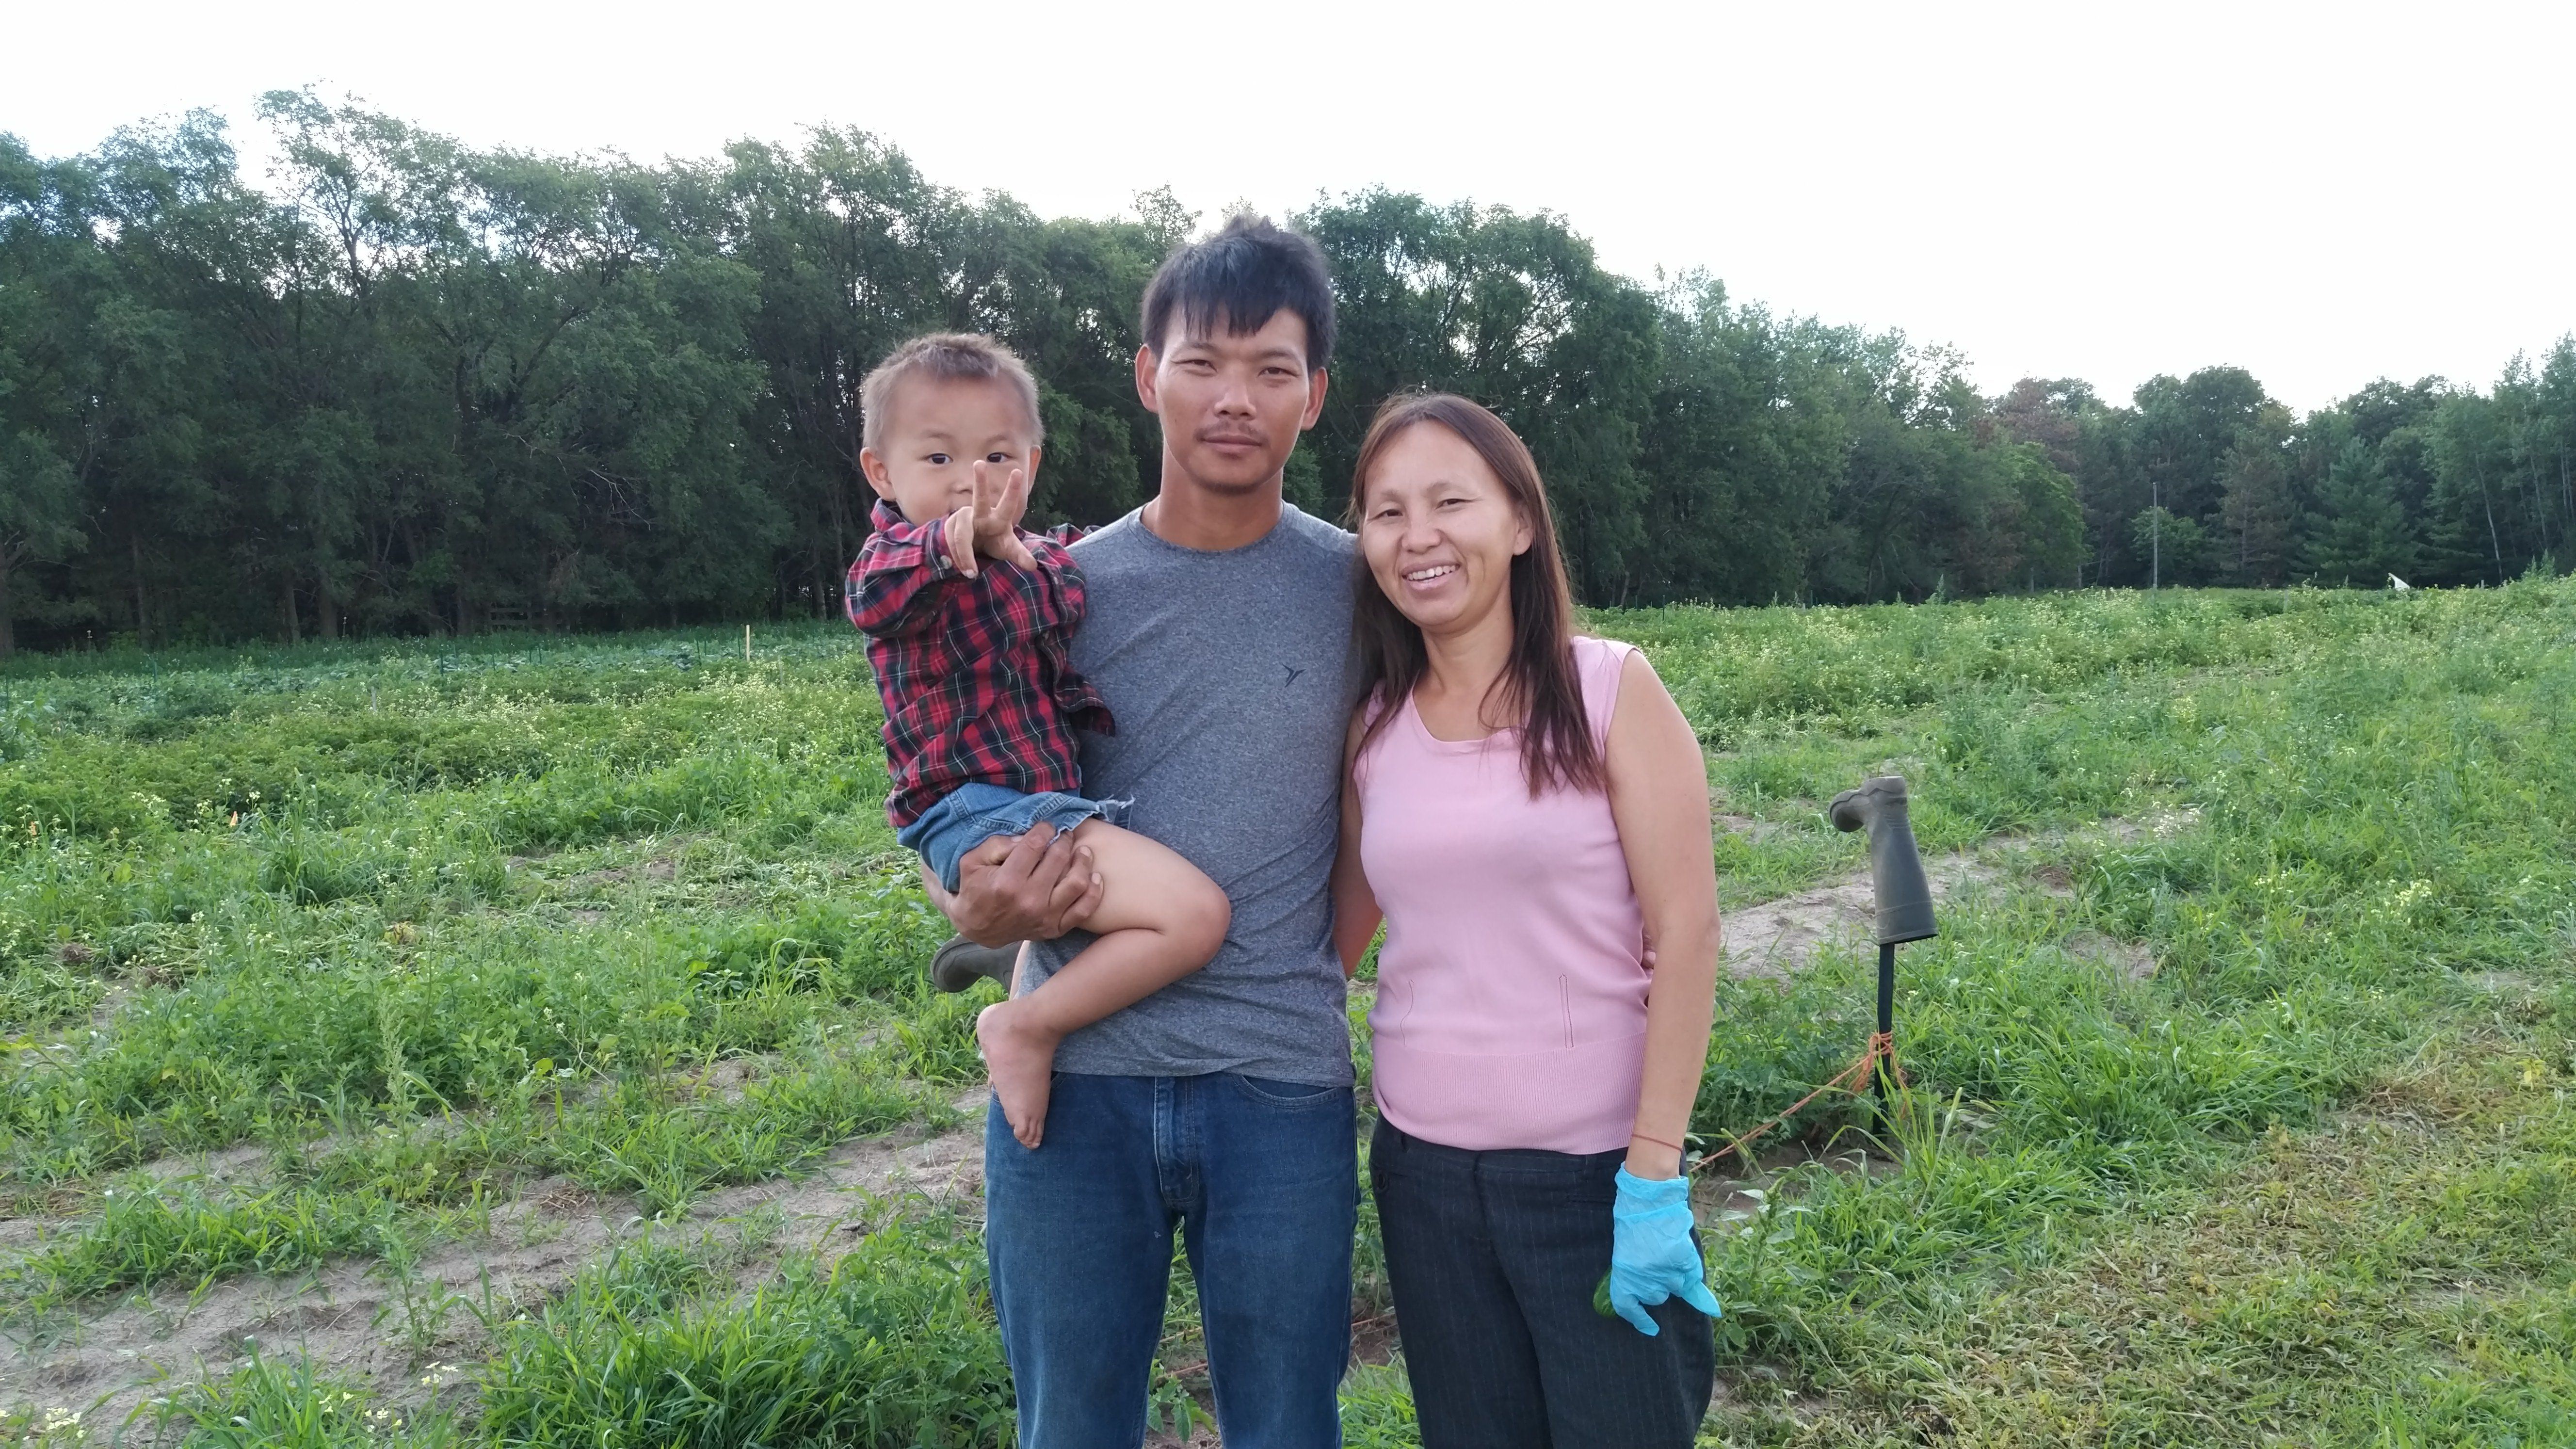 Next Happening: Meet Farmers Choua & Xou